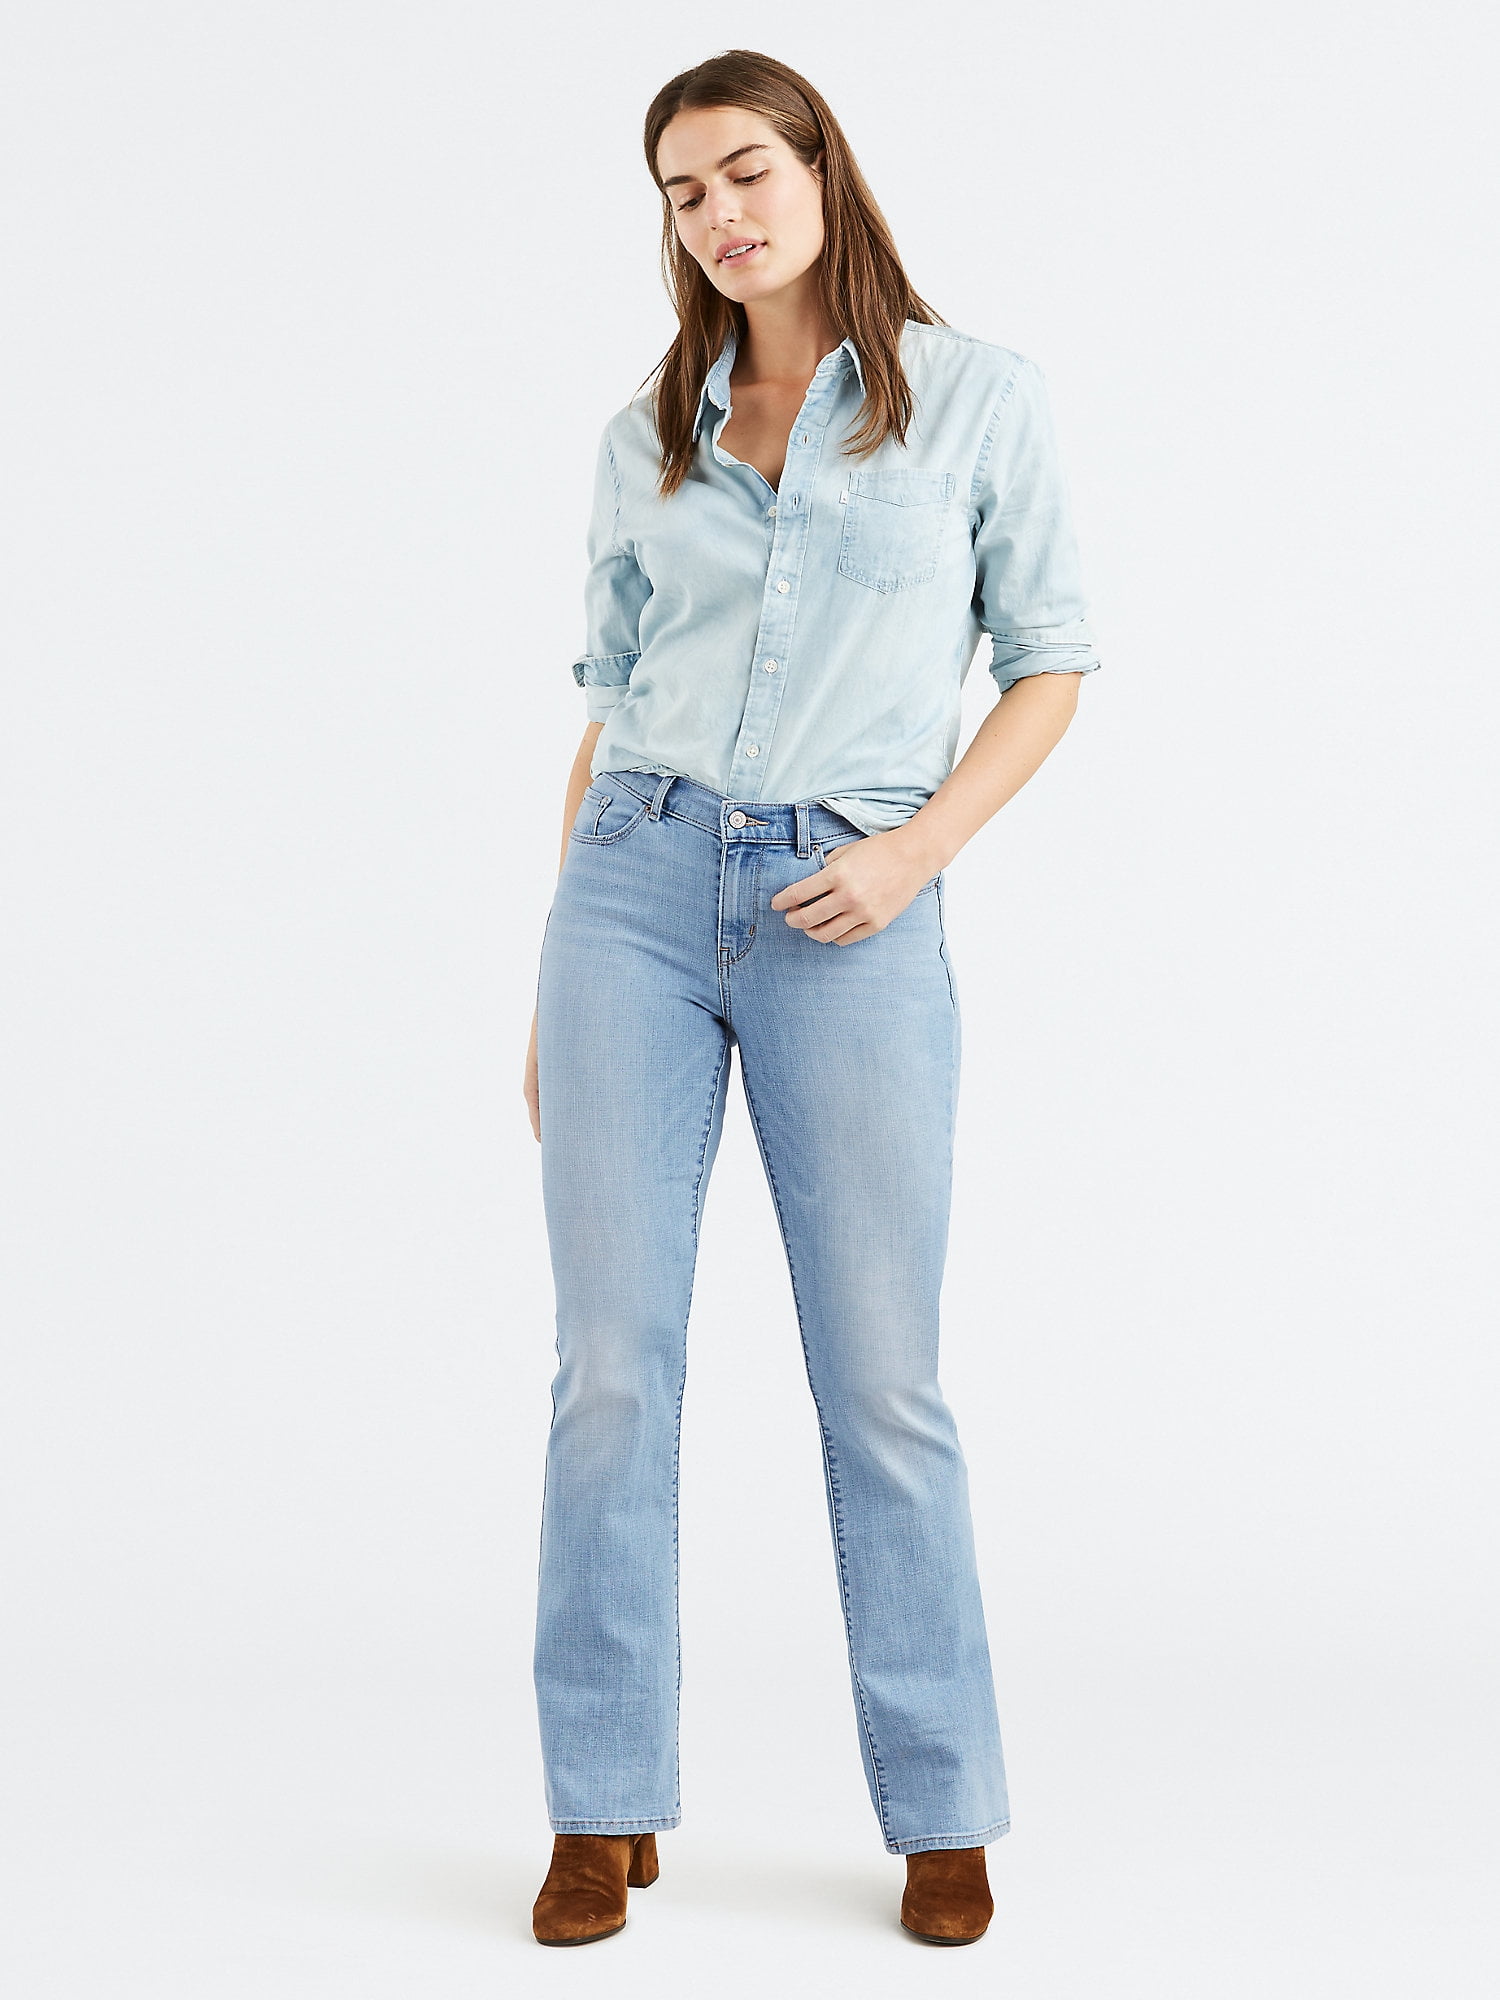 Levi's Original Women's Classic Bootcut Jeans - Walmart.com